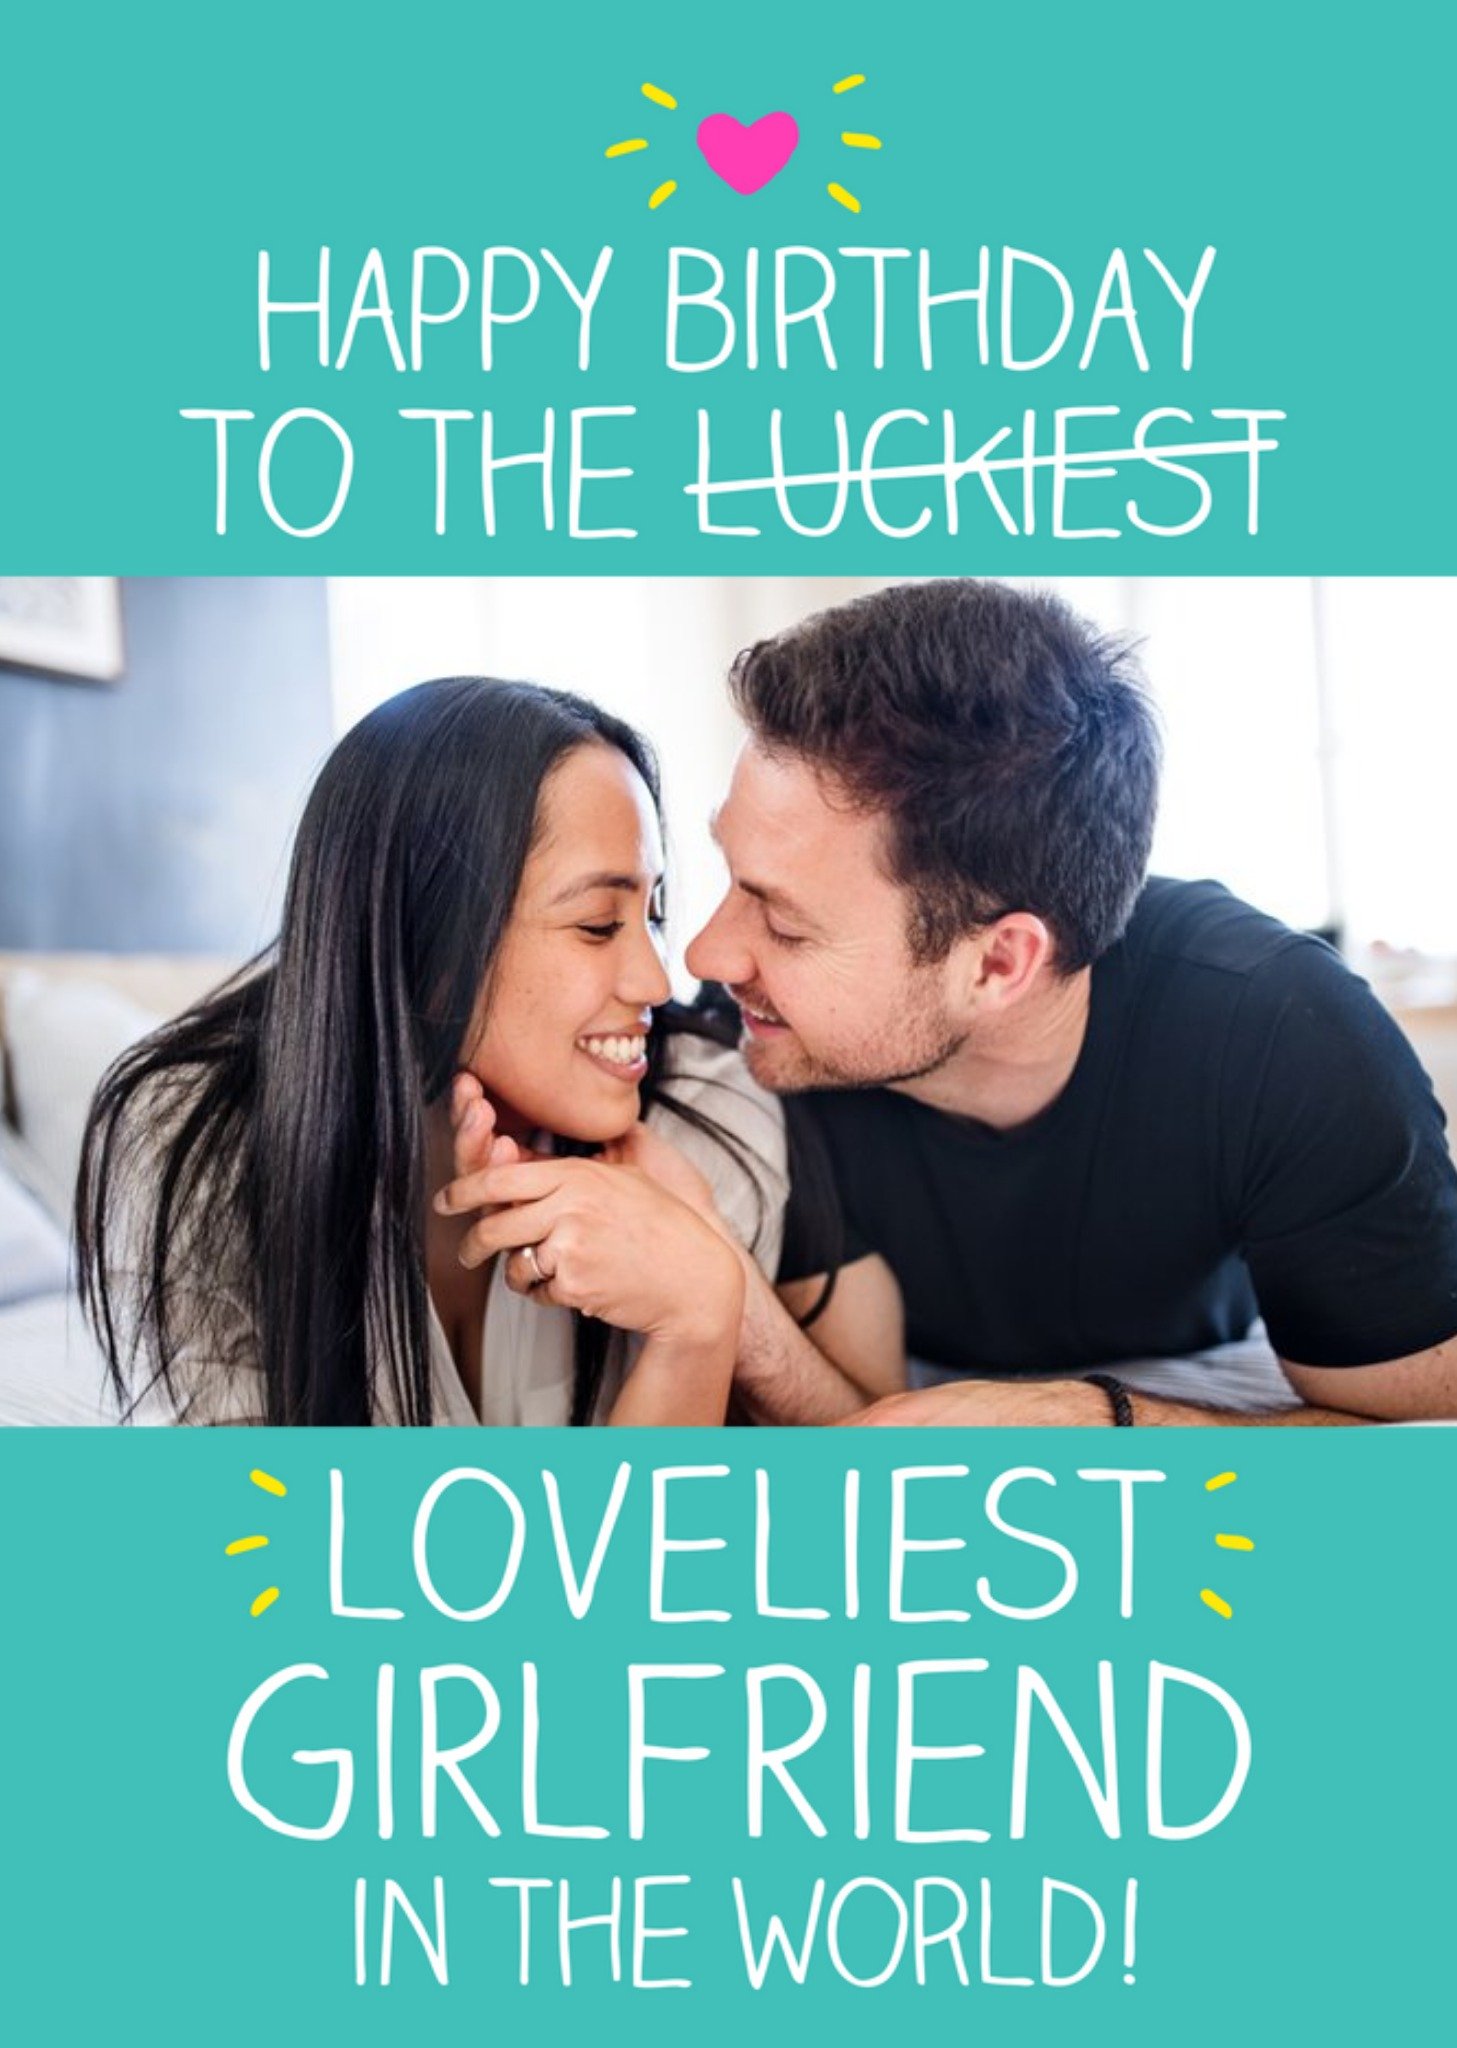 Happy Jackson Luckiest Loveliest Girlfriend In The World Photo Upload Birthday Card, Large